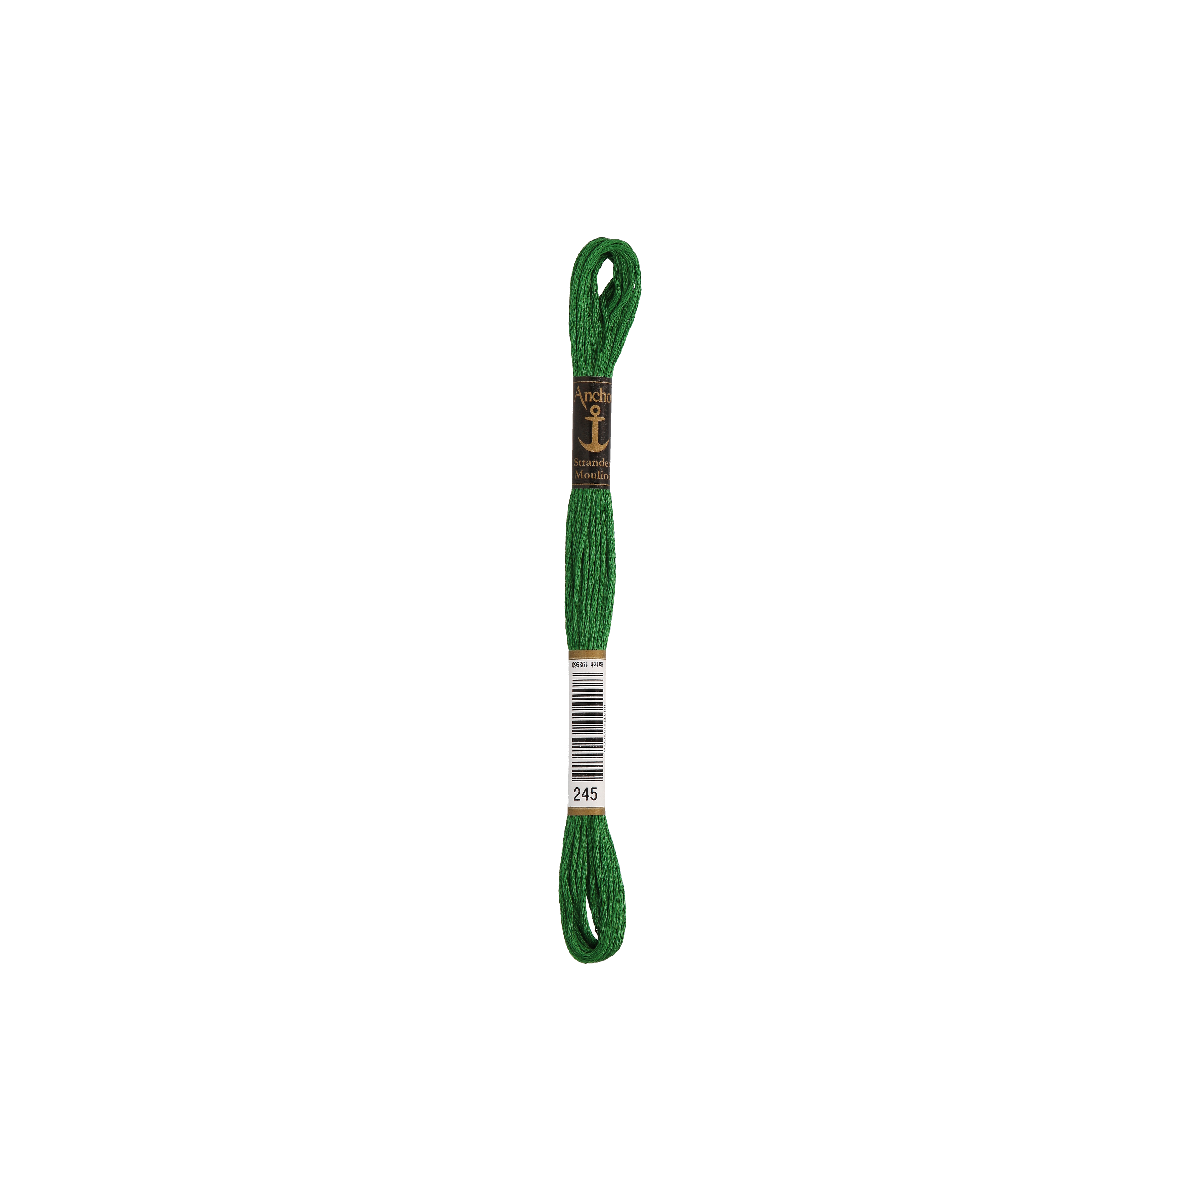 Anchor Torsade 8m, vert sapin, coton, couleur 245, 6 fils